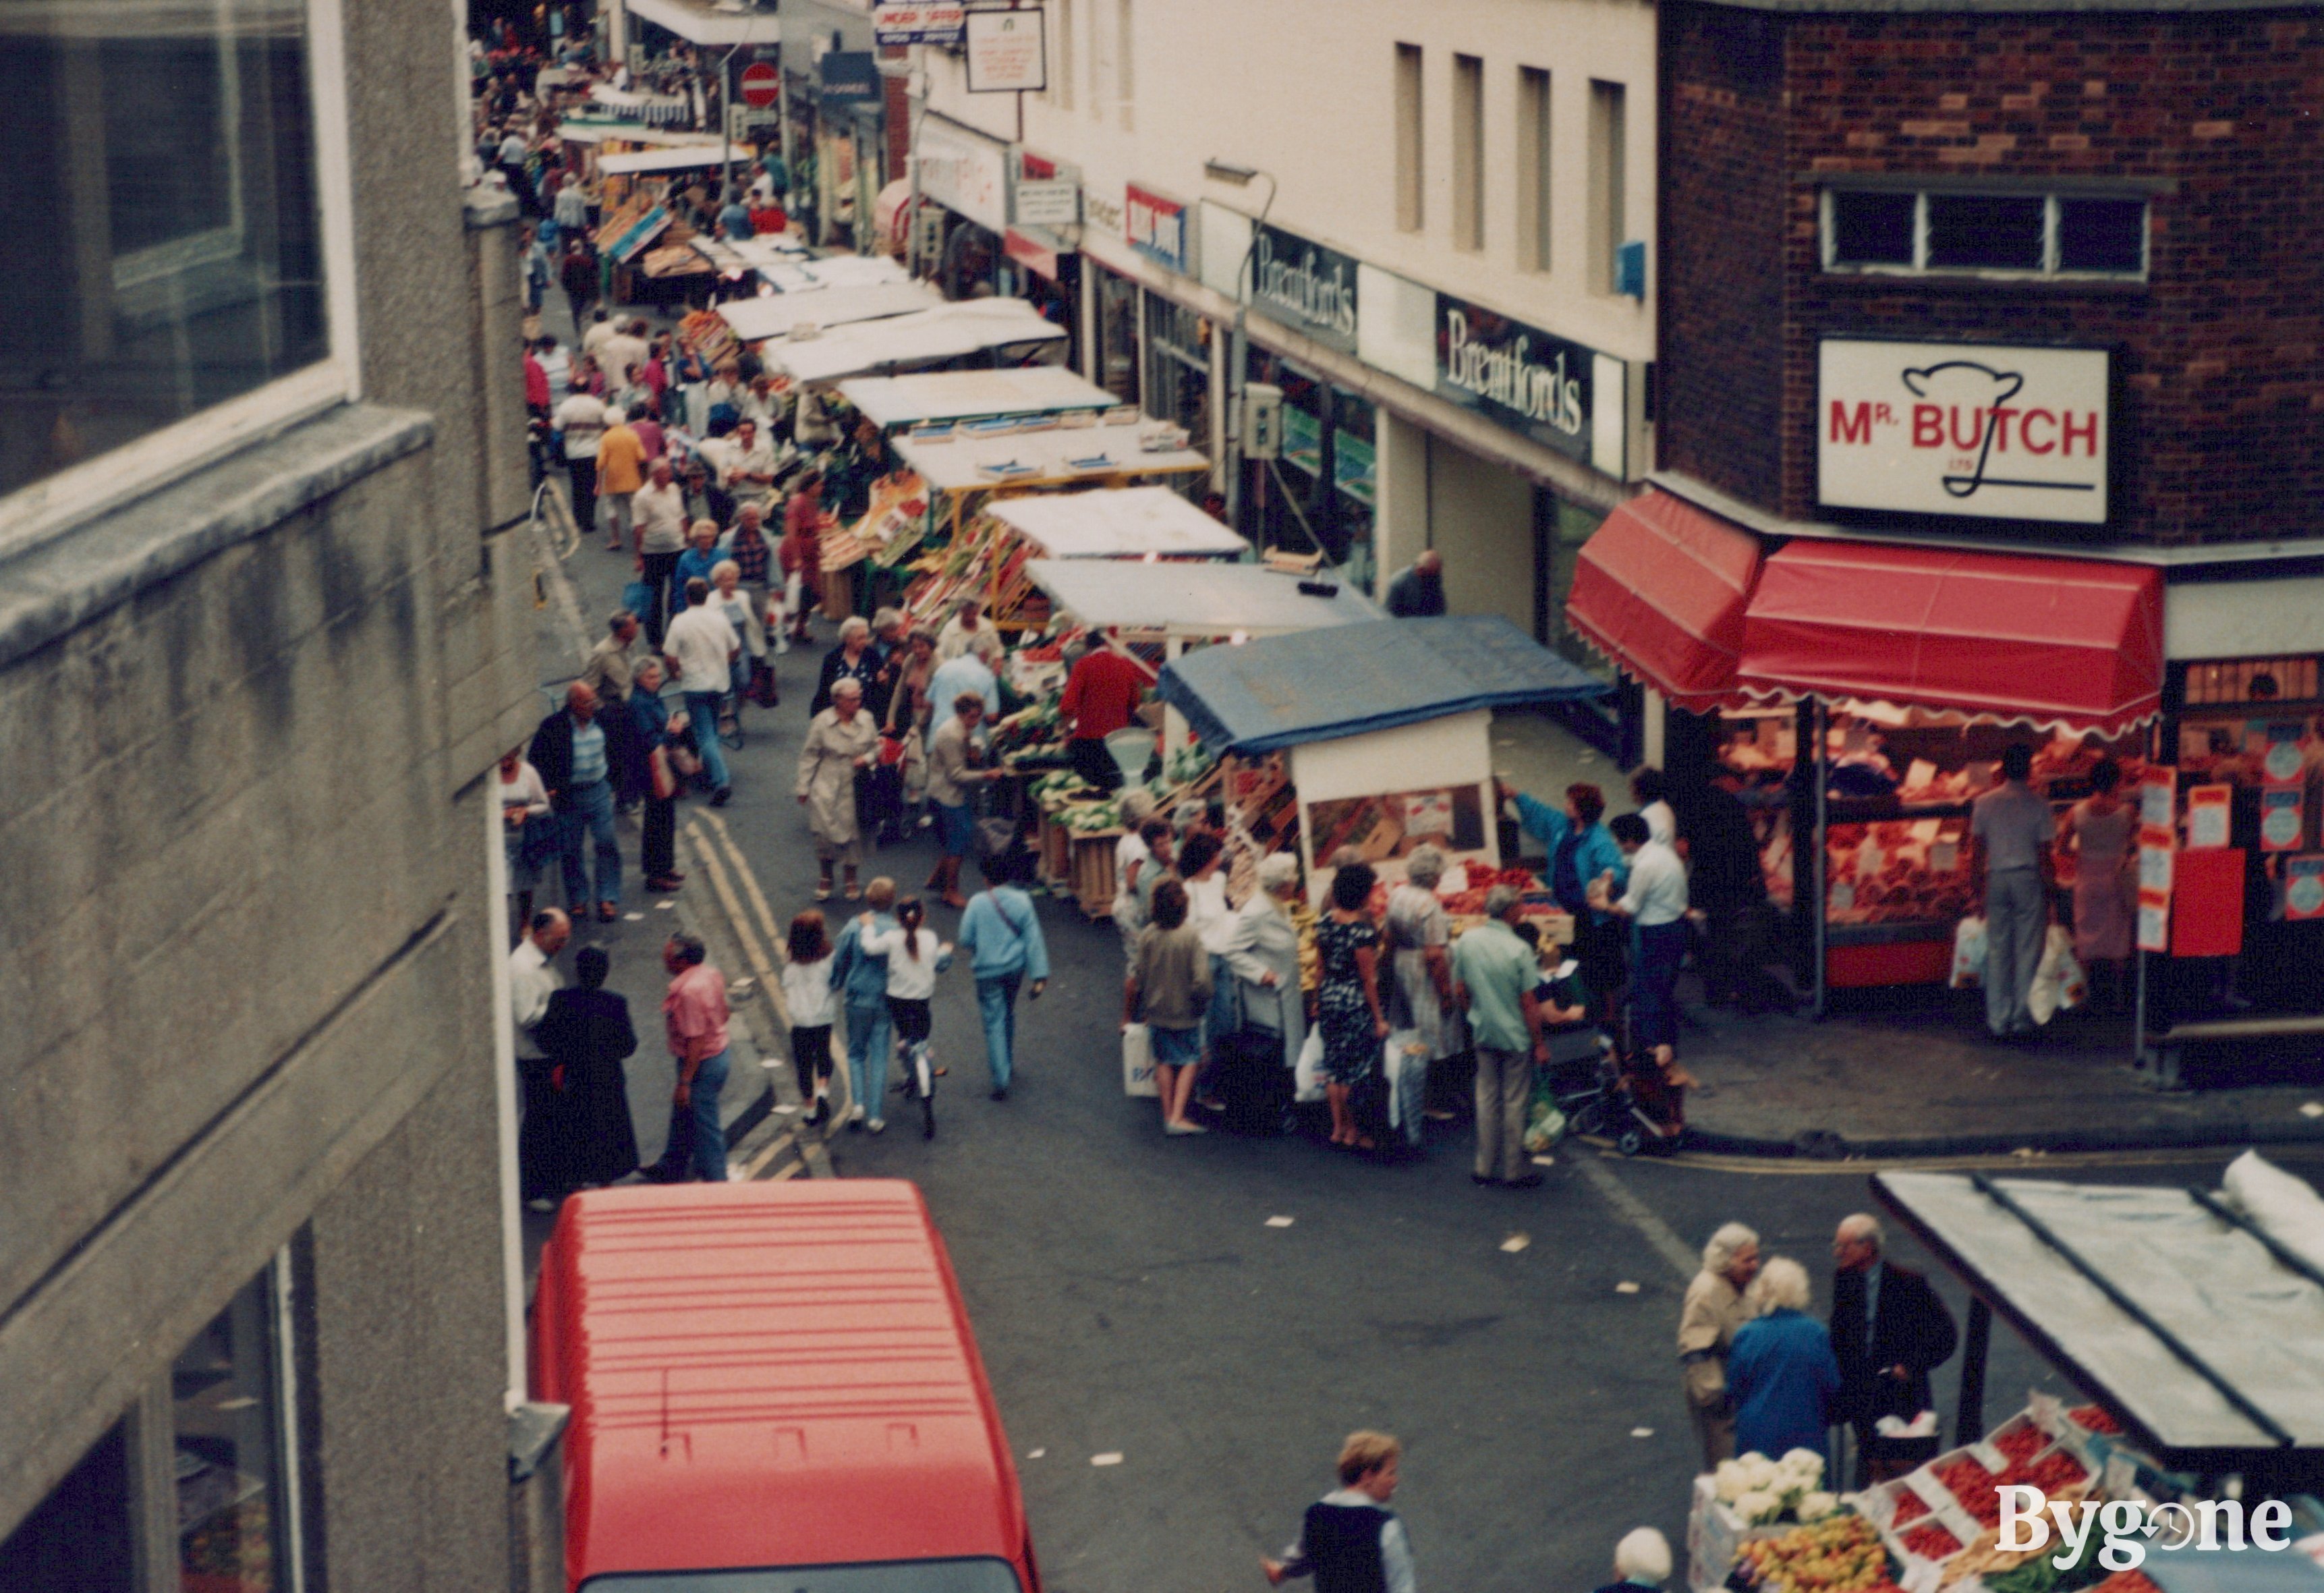 Charlotte Street market, 1987. Showing Mr. Butch